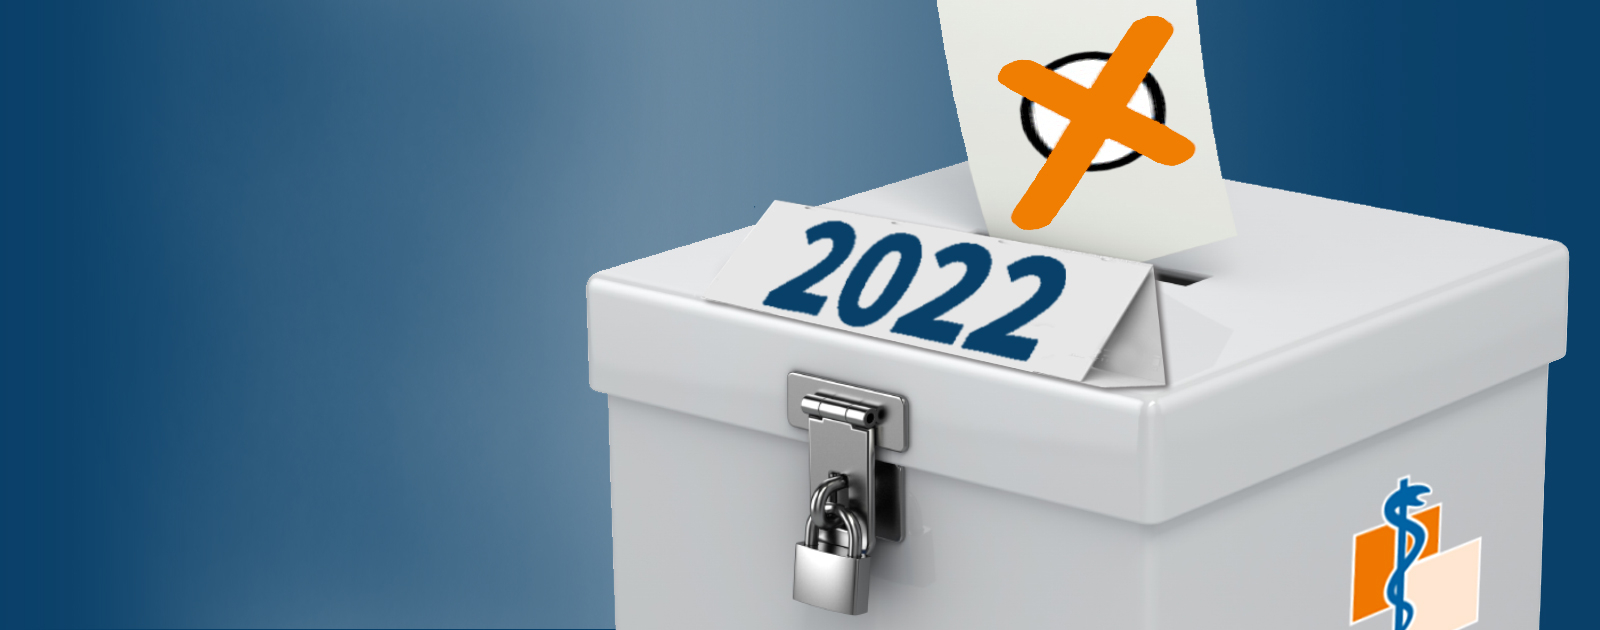 KV-Wahlen 2022 Berlin/brandenburg